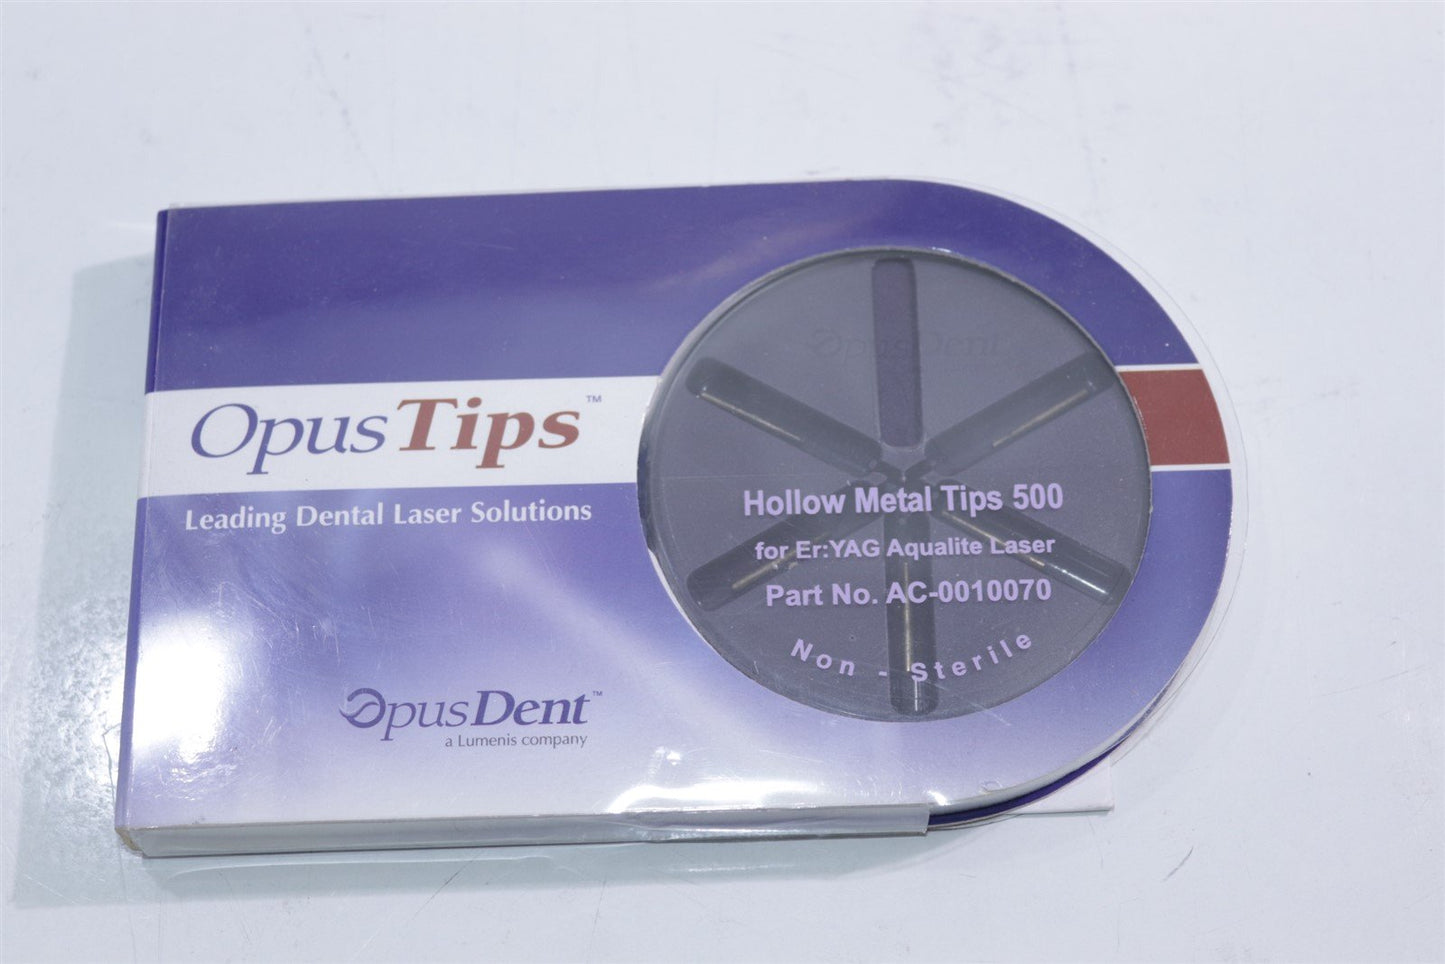 Lumenis OpusDent OpusTips Hollow Metal Tips 500 for Er: YAG Aqualite Laser